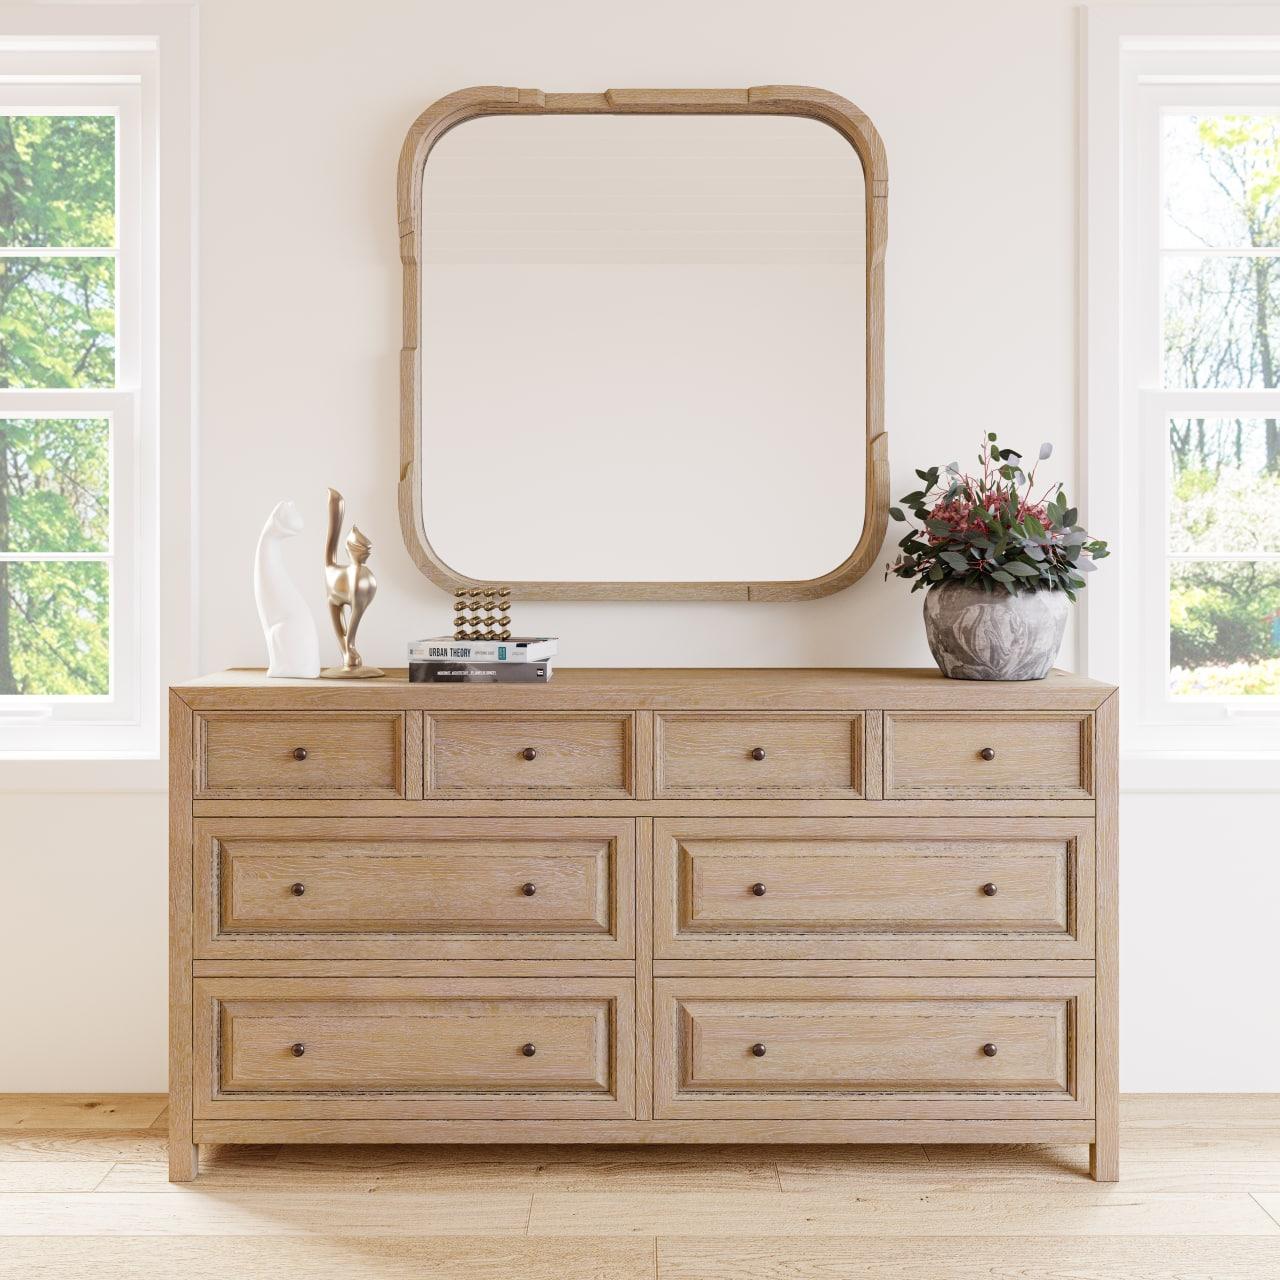 Modern, Transitional Dresser With Mirror Post 288130-2355-2pcs in Light Brown, Beige 